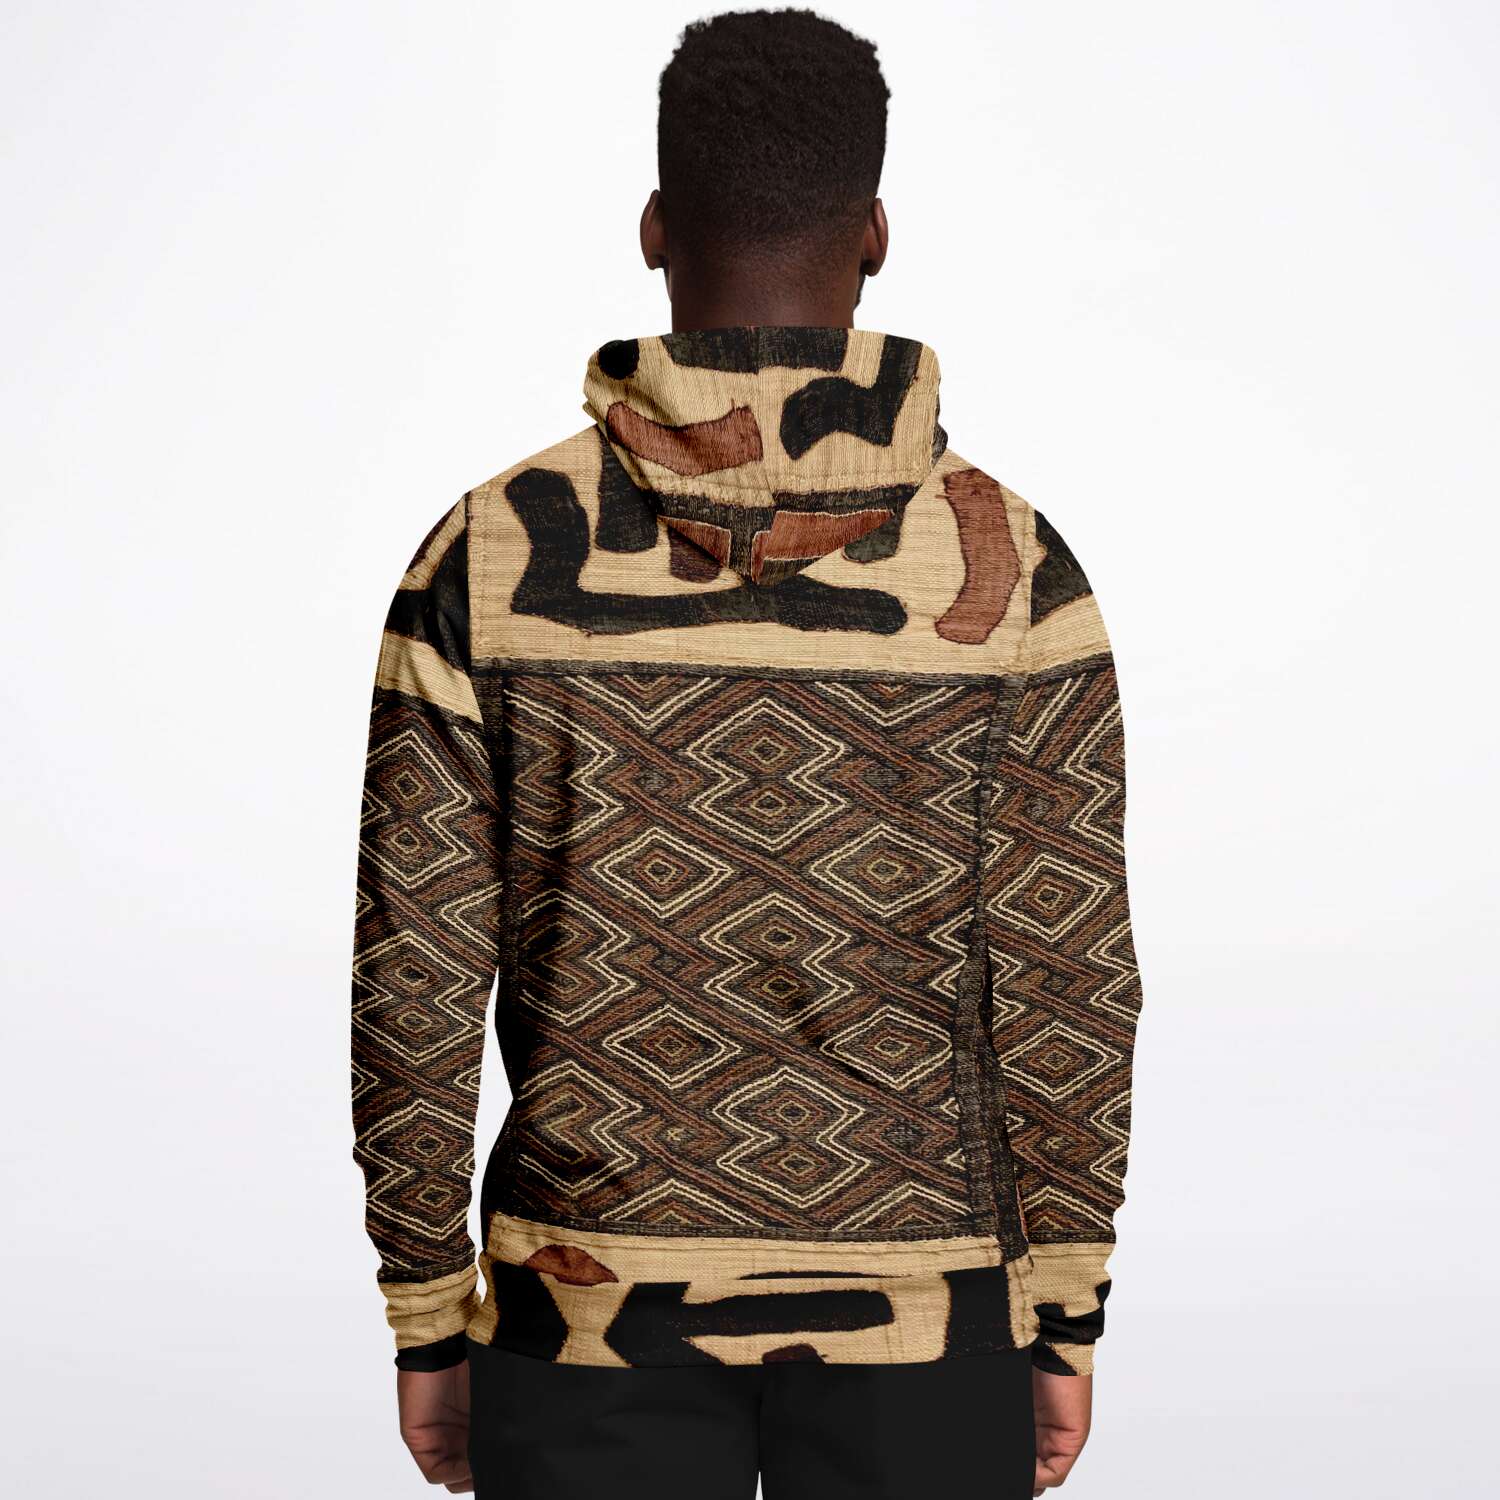 Fashion Hoodie - AOP Kuba Cloth Inspired African Hoodie, Congo Bogolan Kente Cloth Mudcloth Jacket Textile Hippie Boho Afrocentric Kilim Tribal Pullover Hoodie